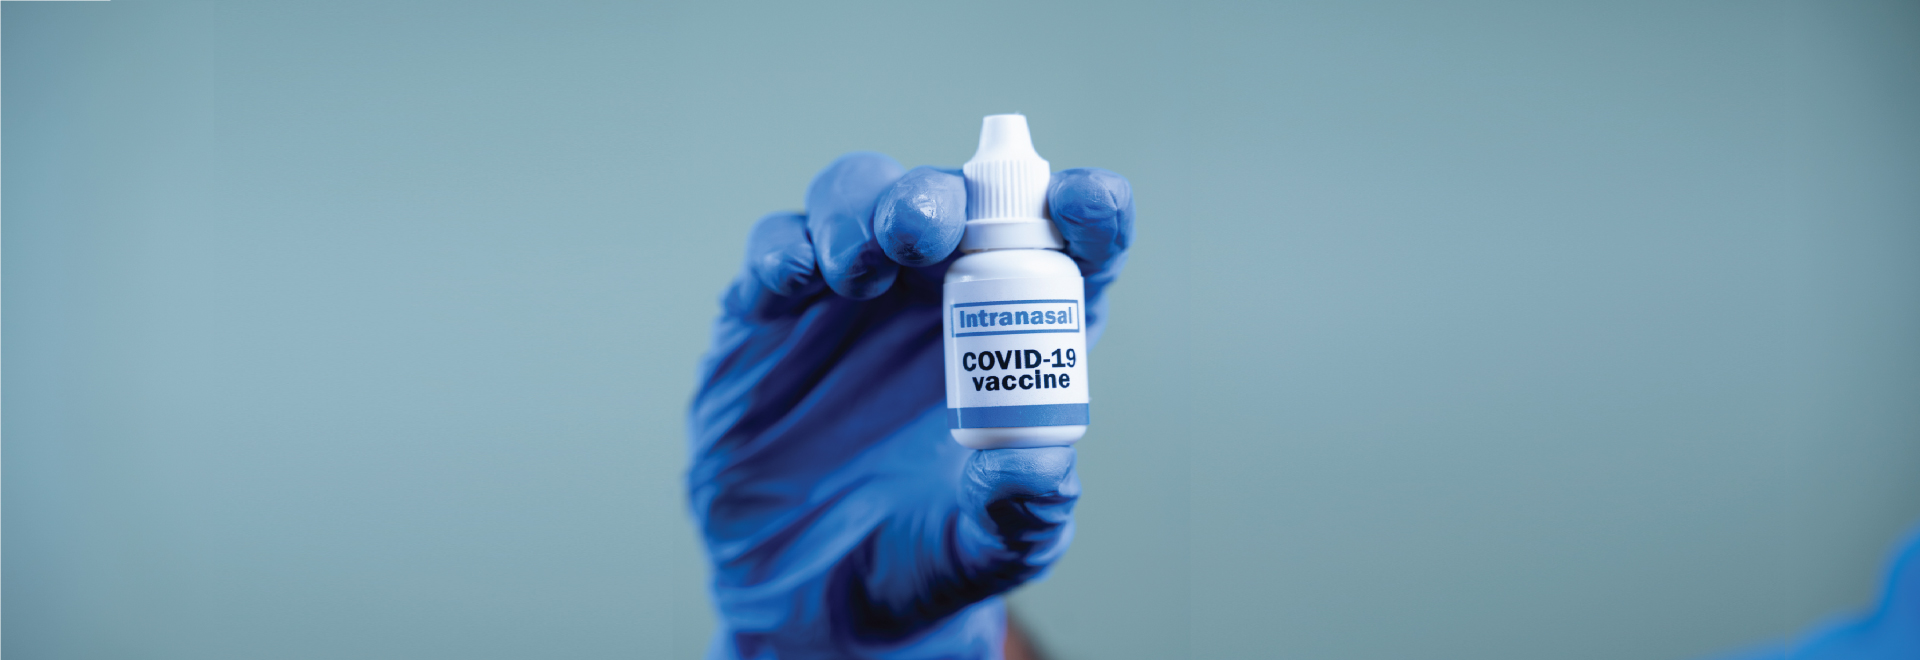 covid-19-nasal-spray-vaccine-vs-vaccination-shot